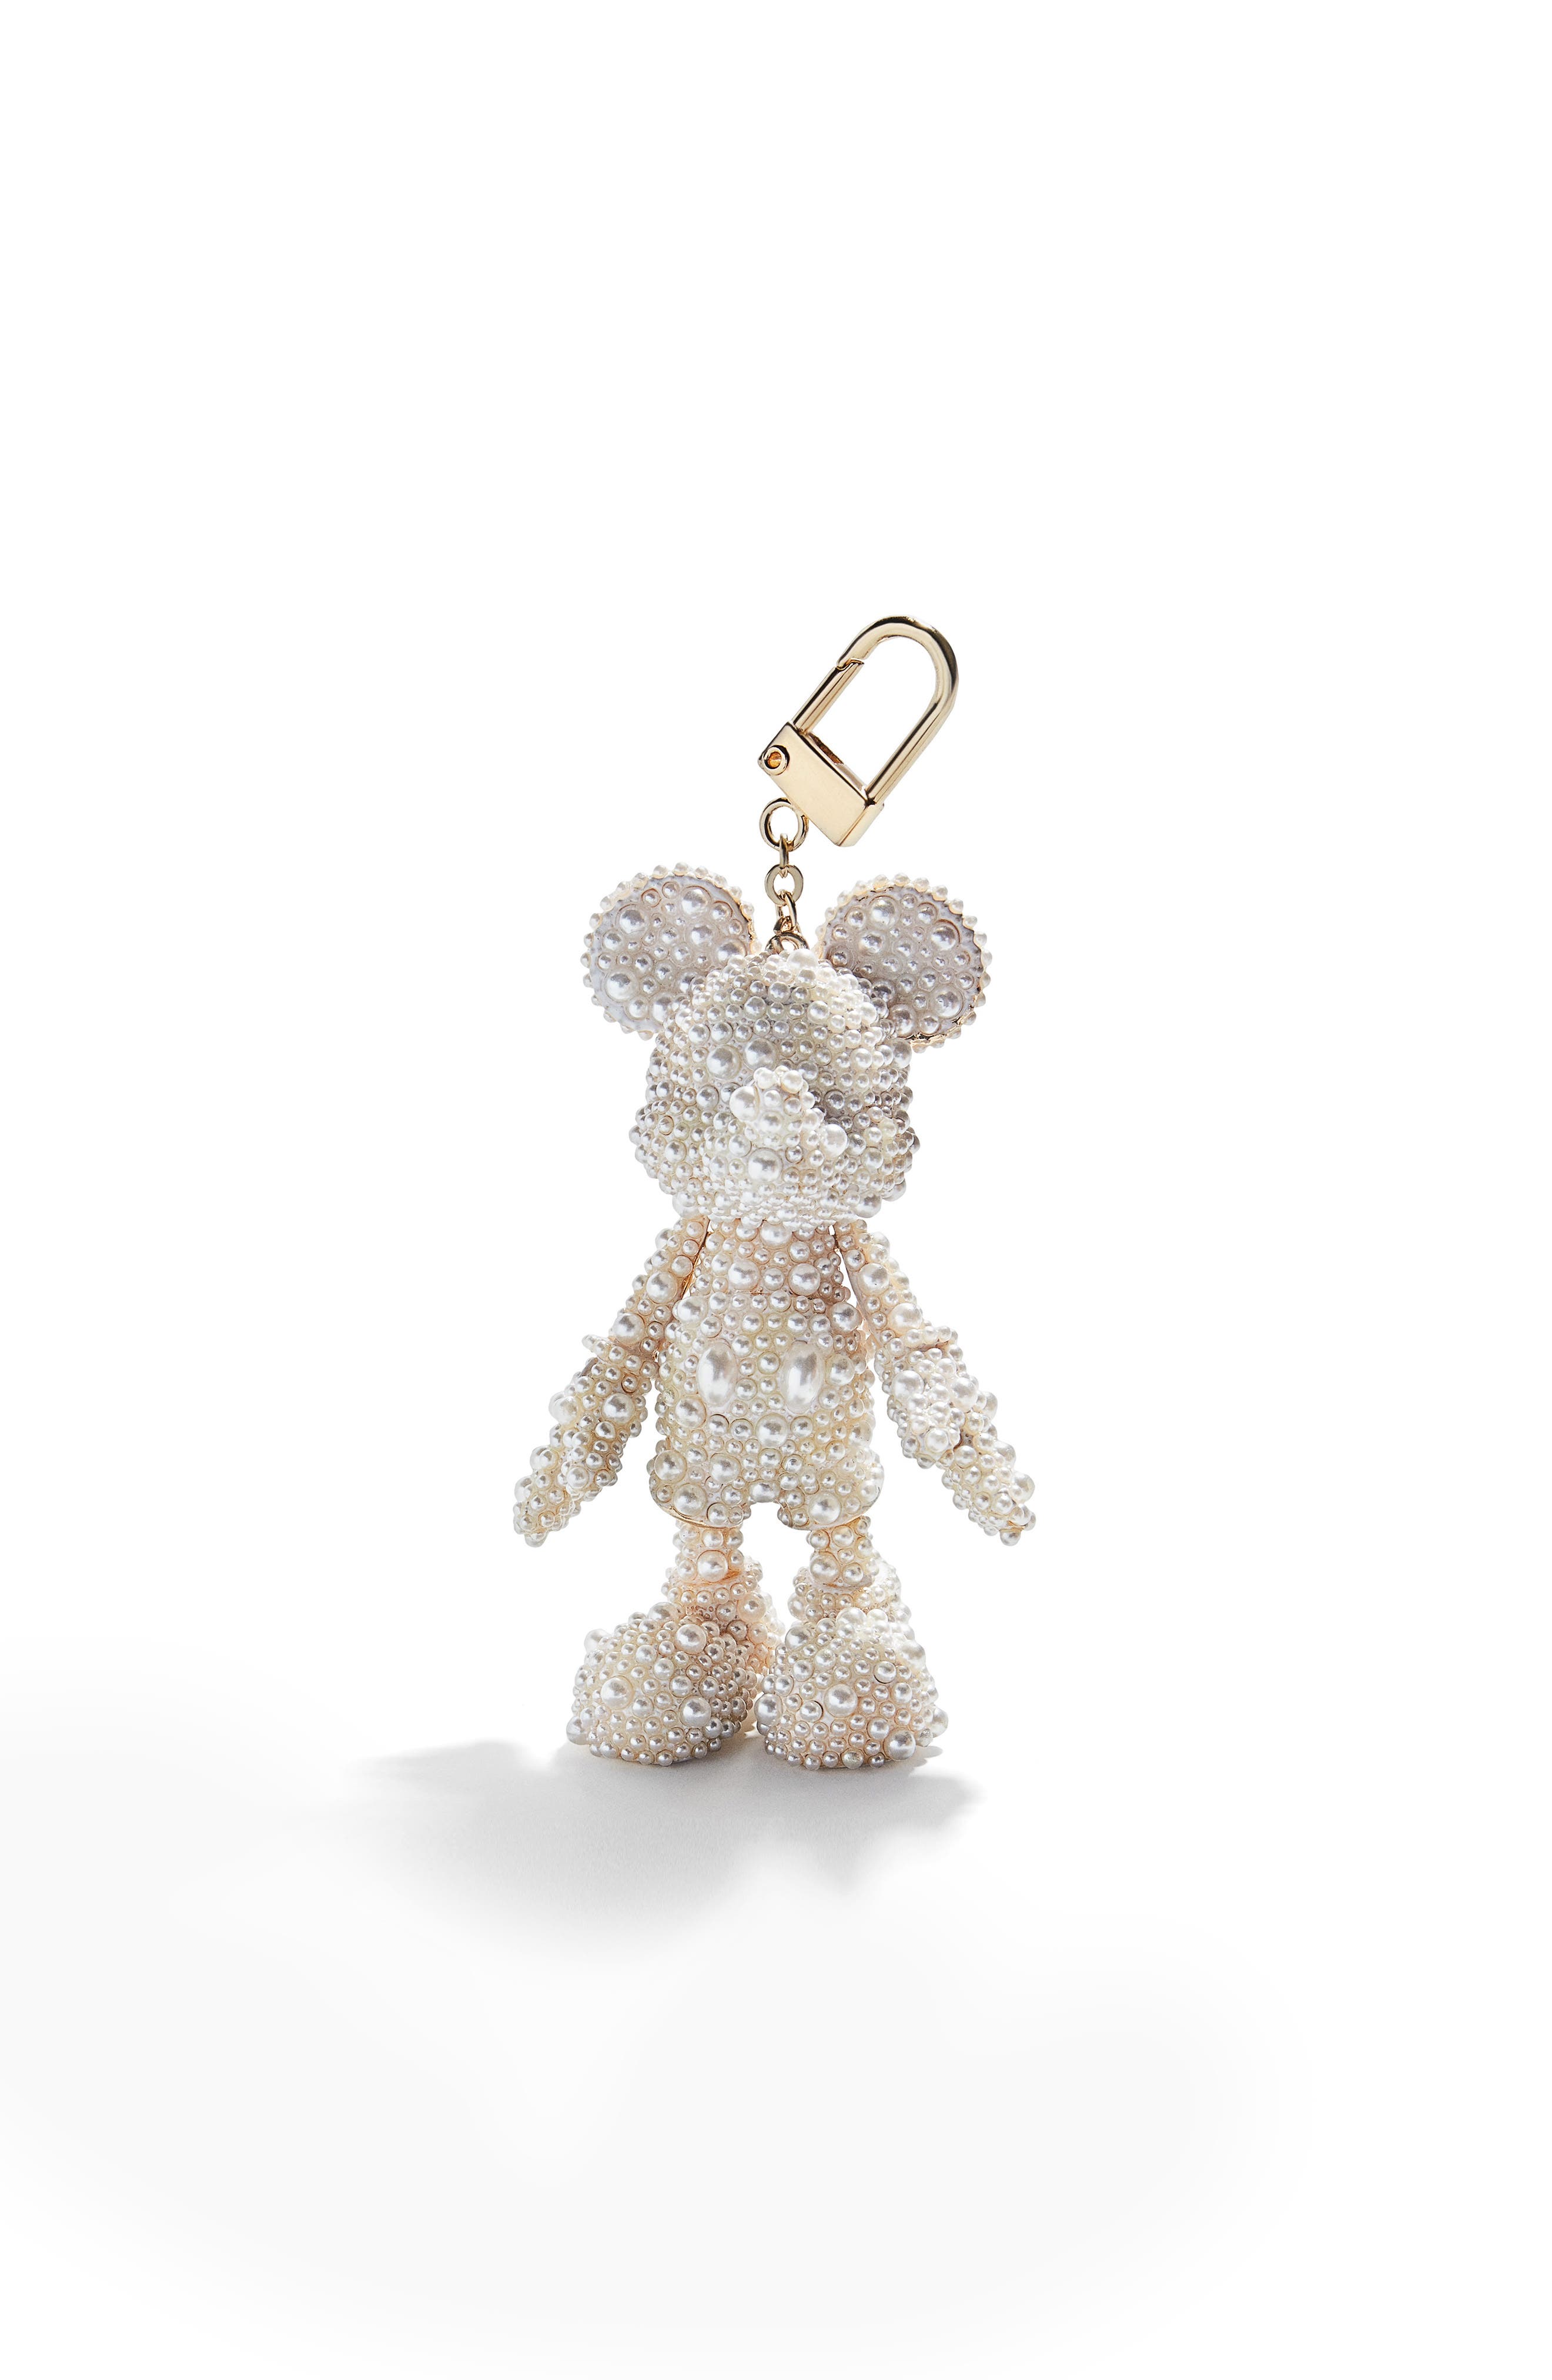 BAUBLEBAR Disney Mickey Mouse Goldtone Bag Charm. 3